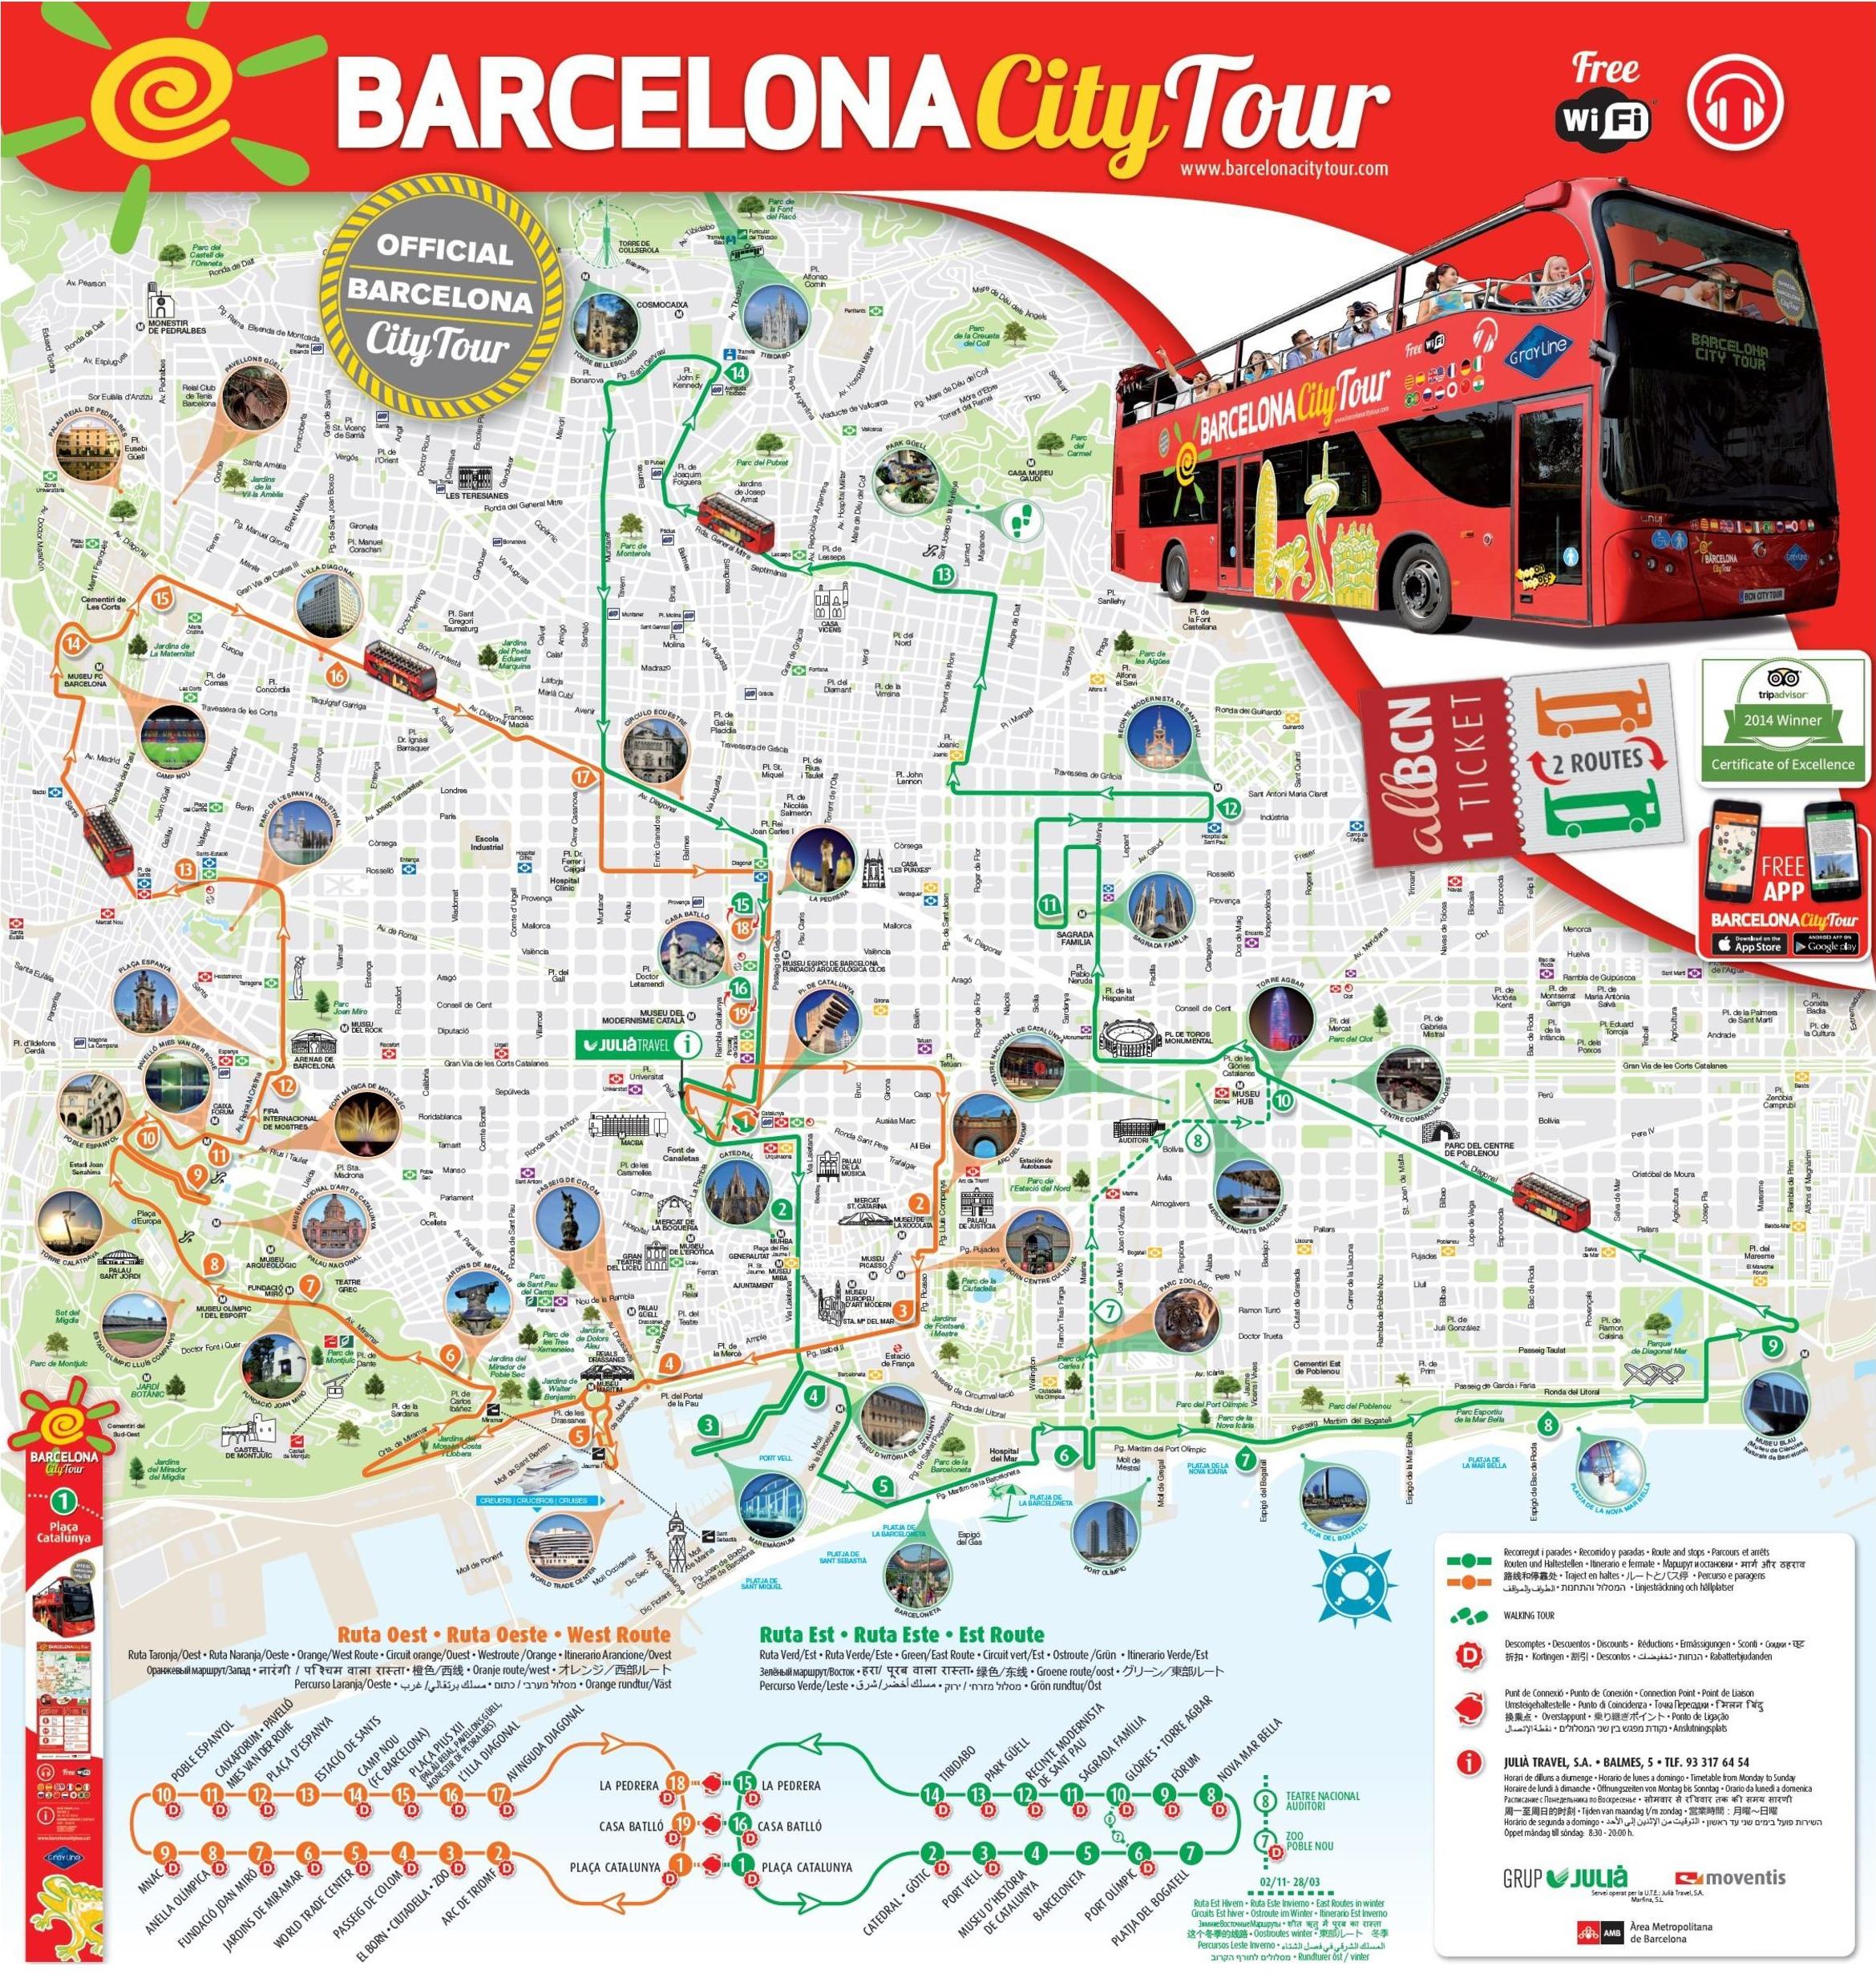 barcelona open bus tour